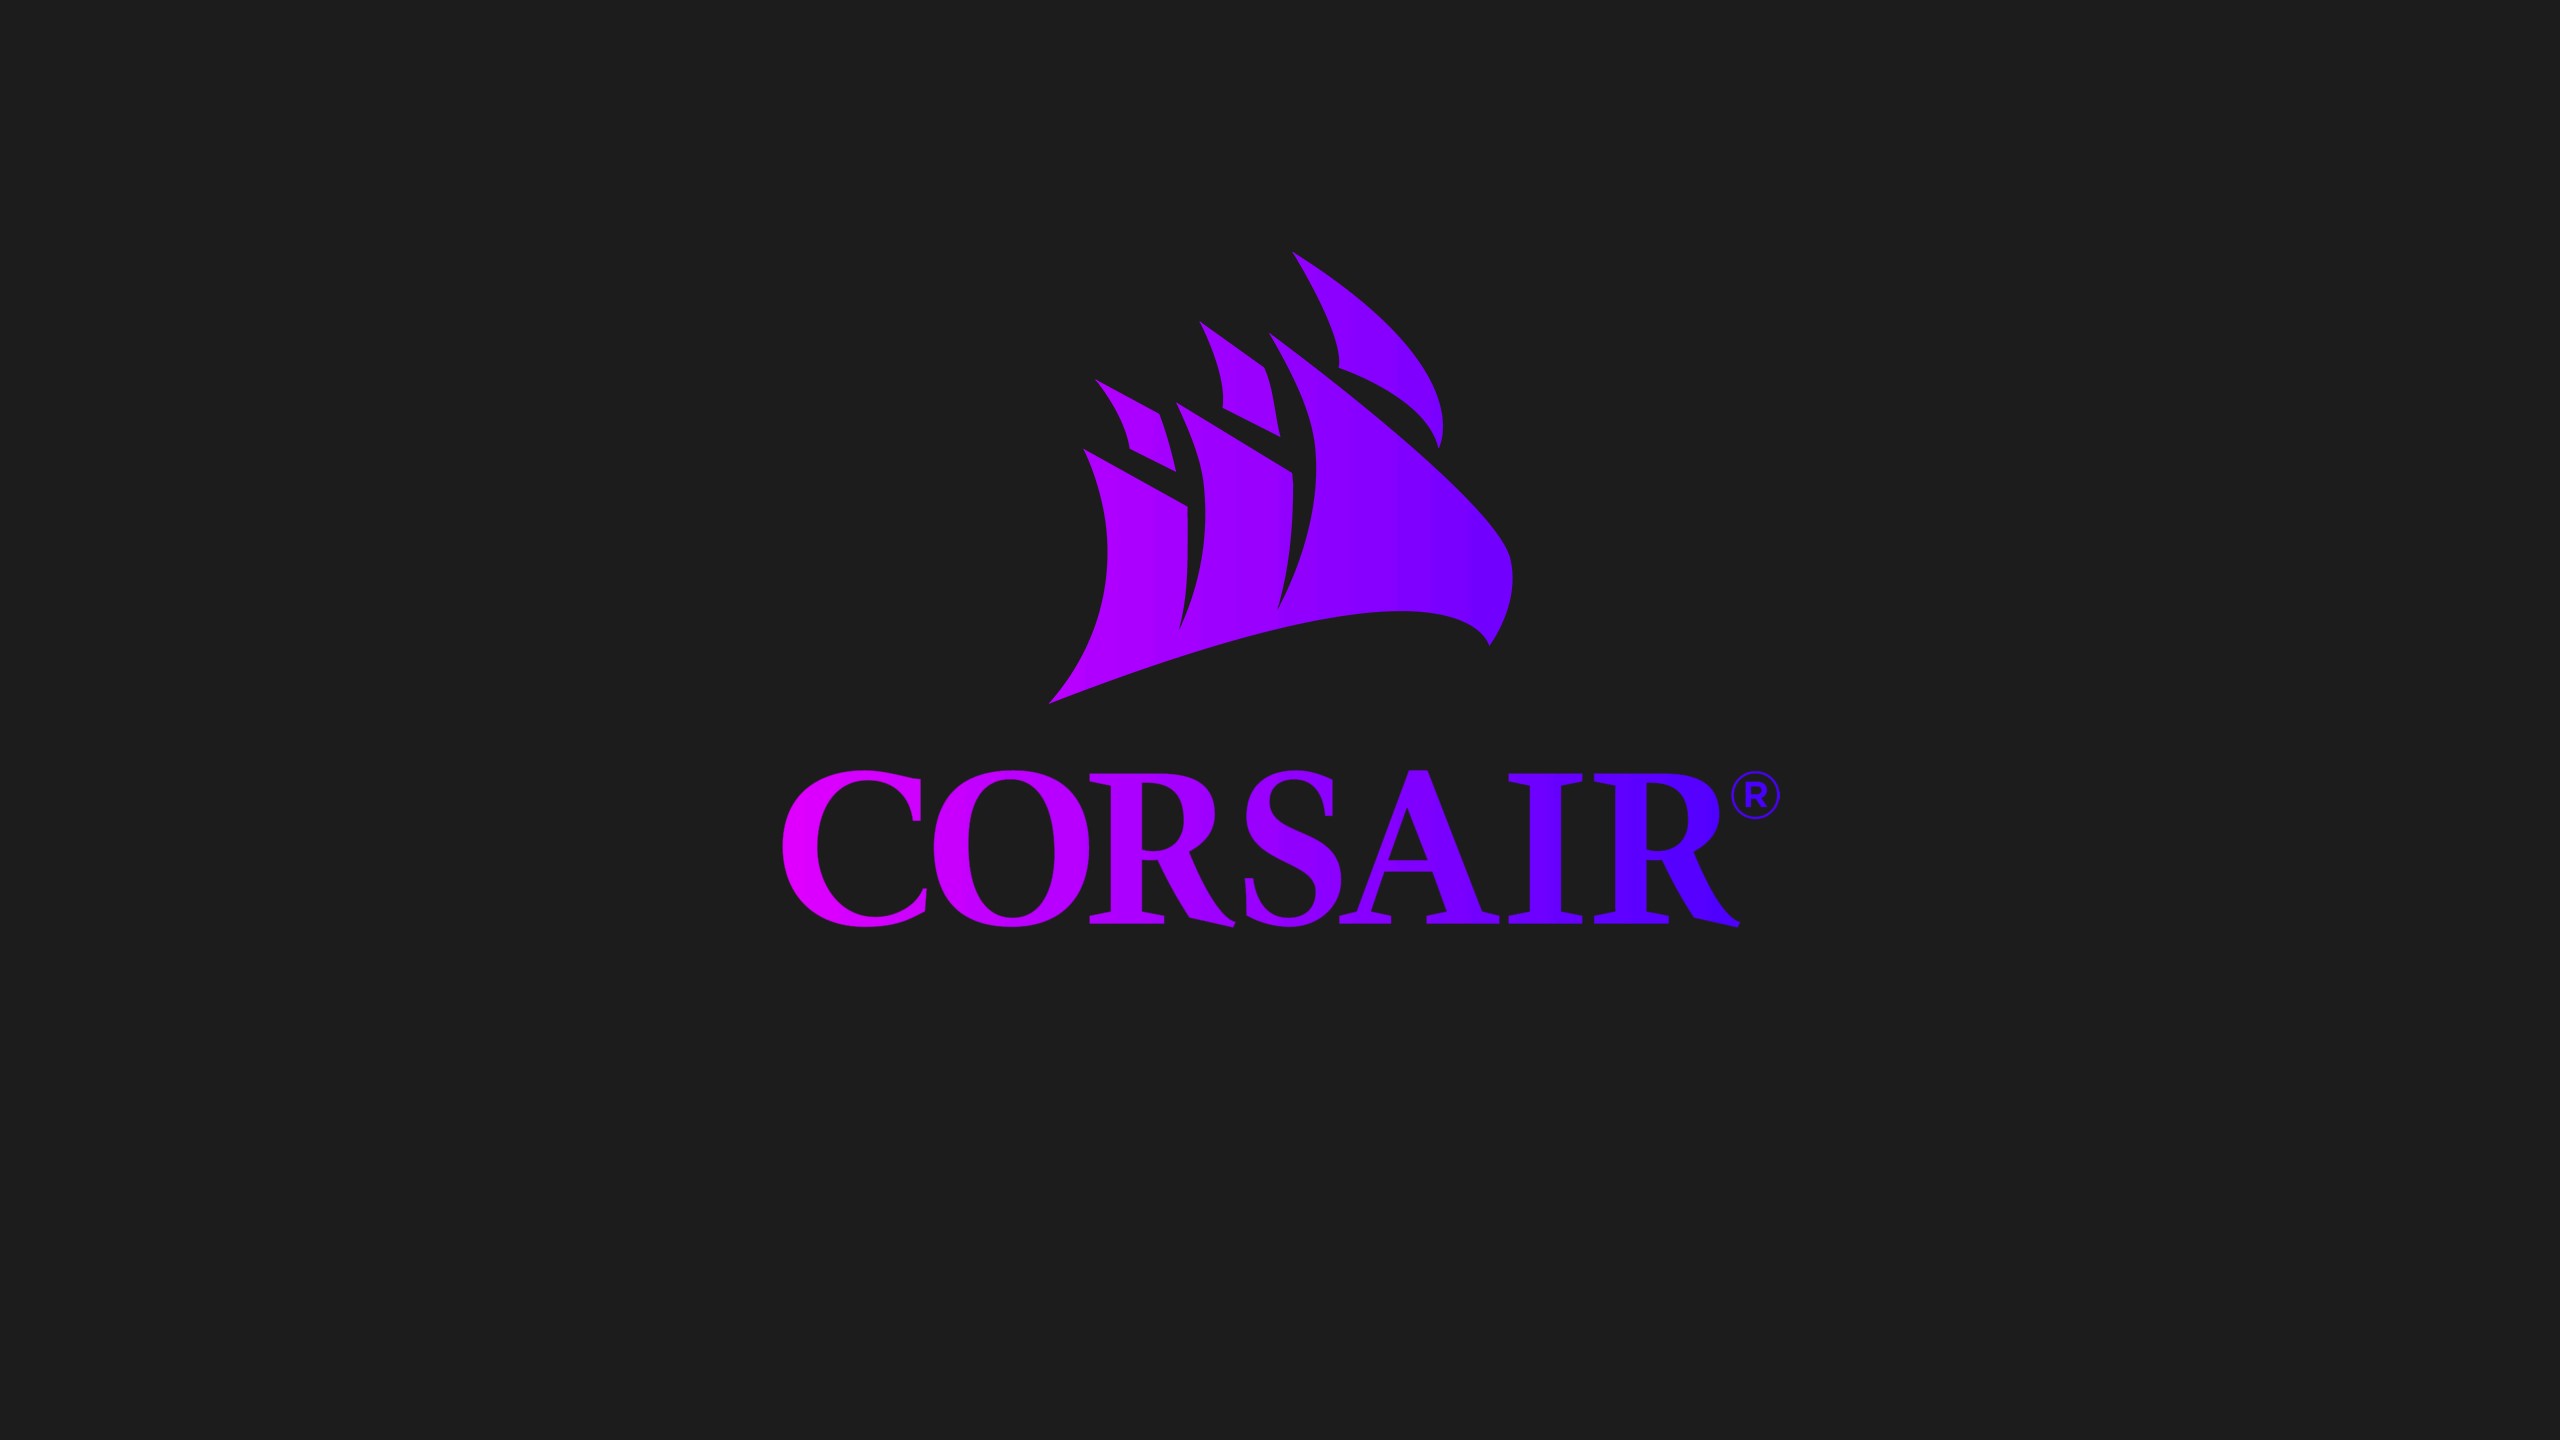 Corsair RGB - VIDEO - Wallpaper engine by MrRichardEdits on DeviantArt